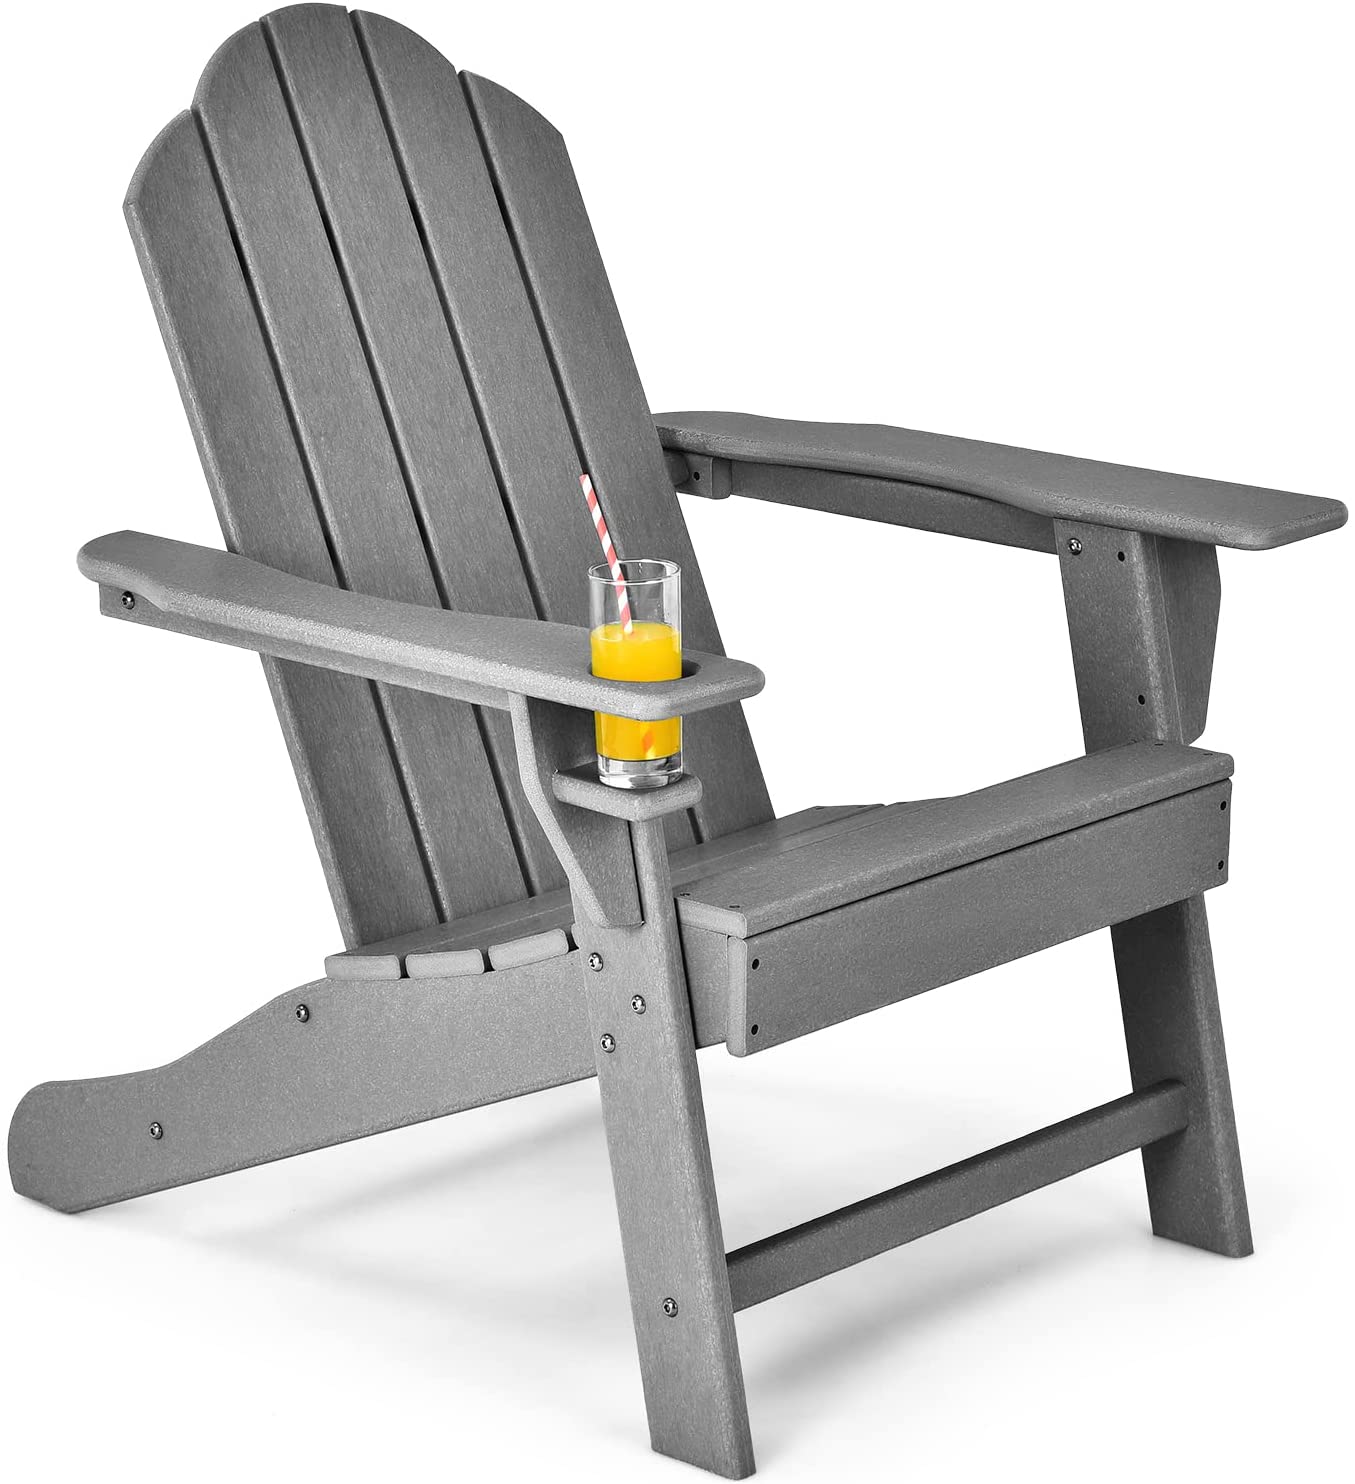 Giantex Adirondack Chair, Grey